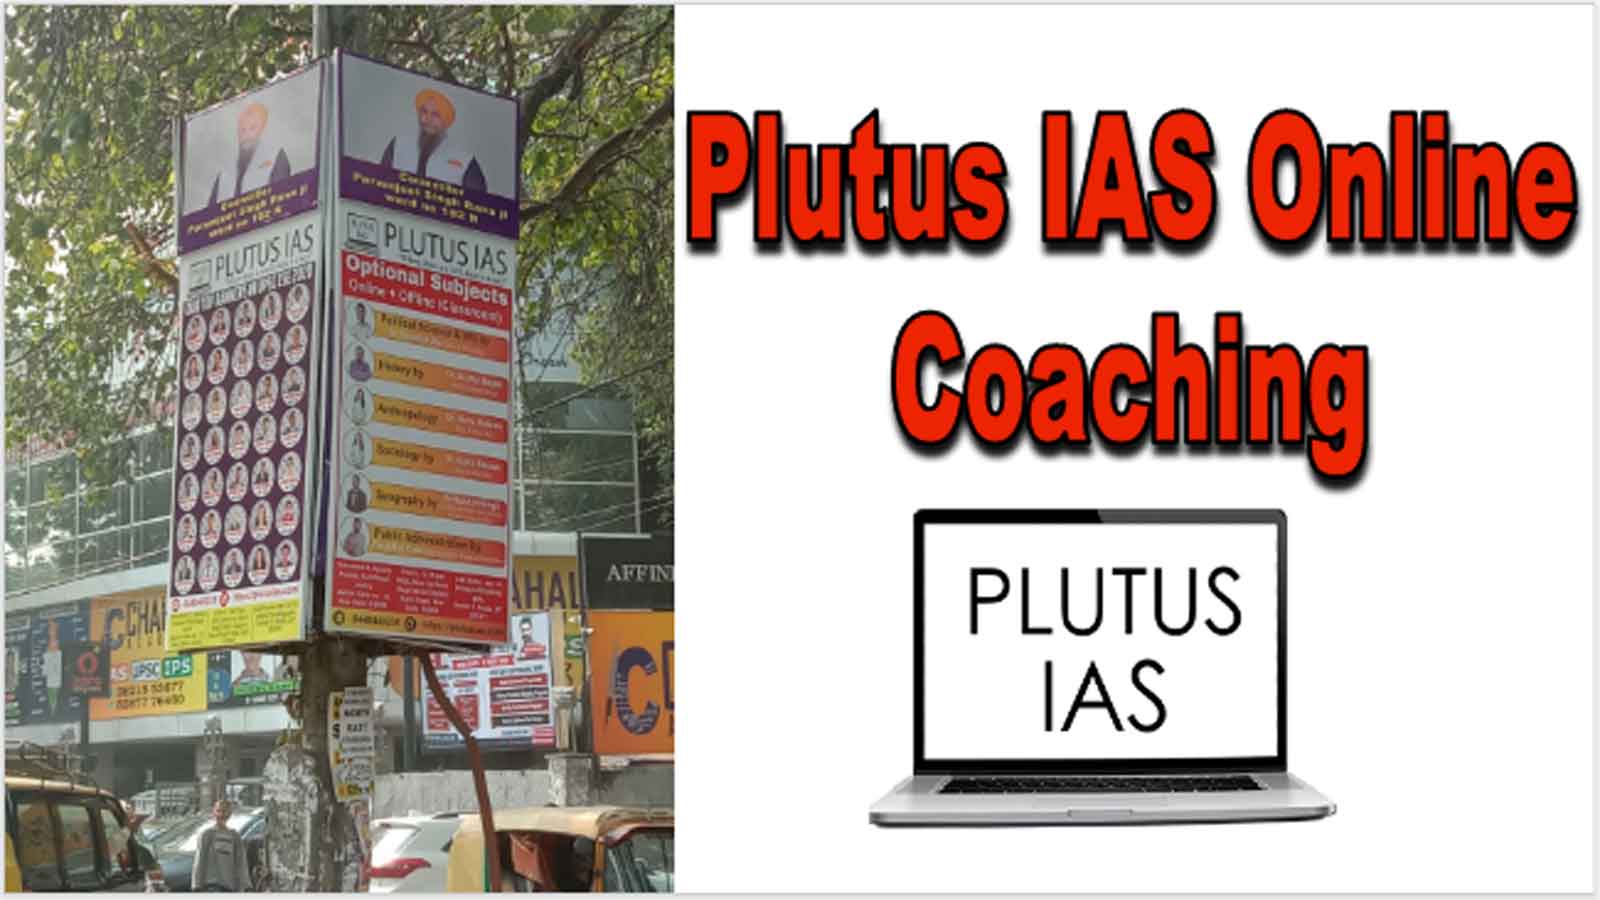 Plutus IAS Online Coaching